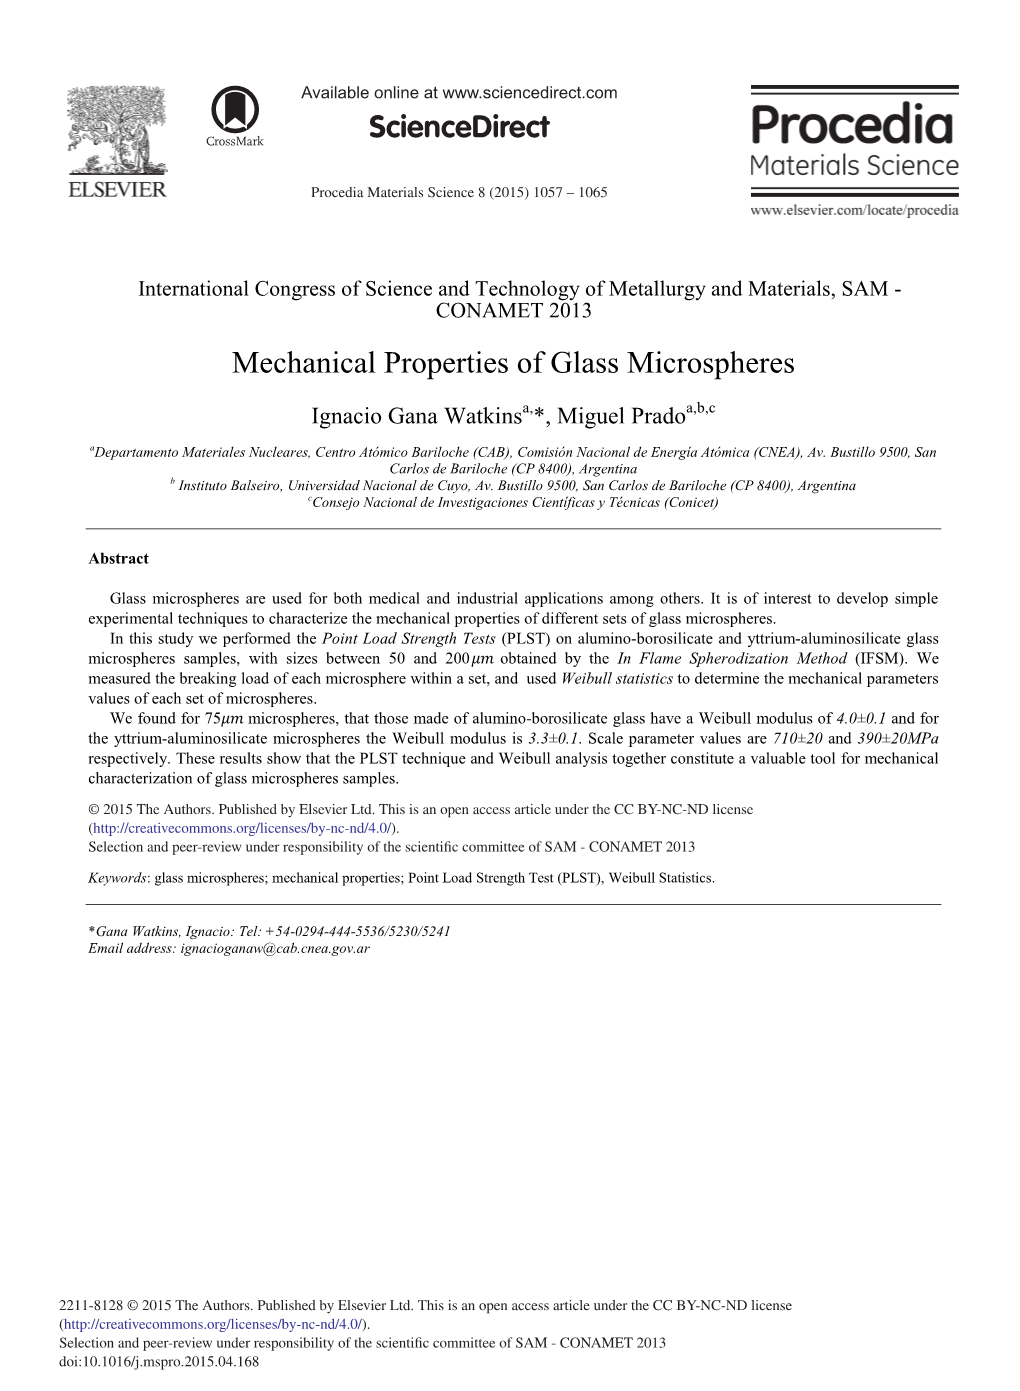 Mechanical Properties of Glass Microspheres